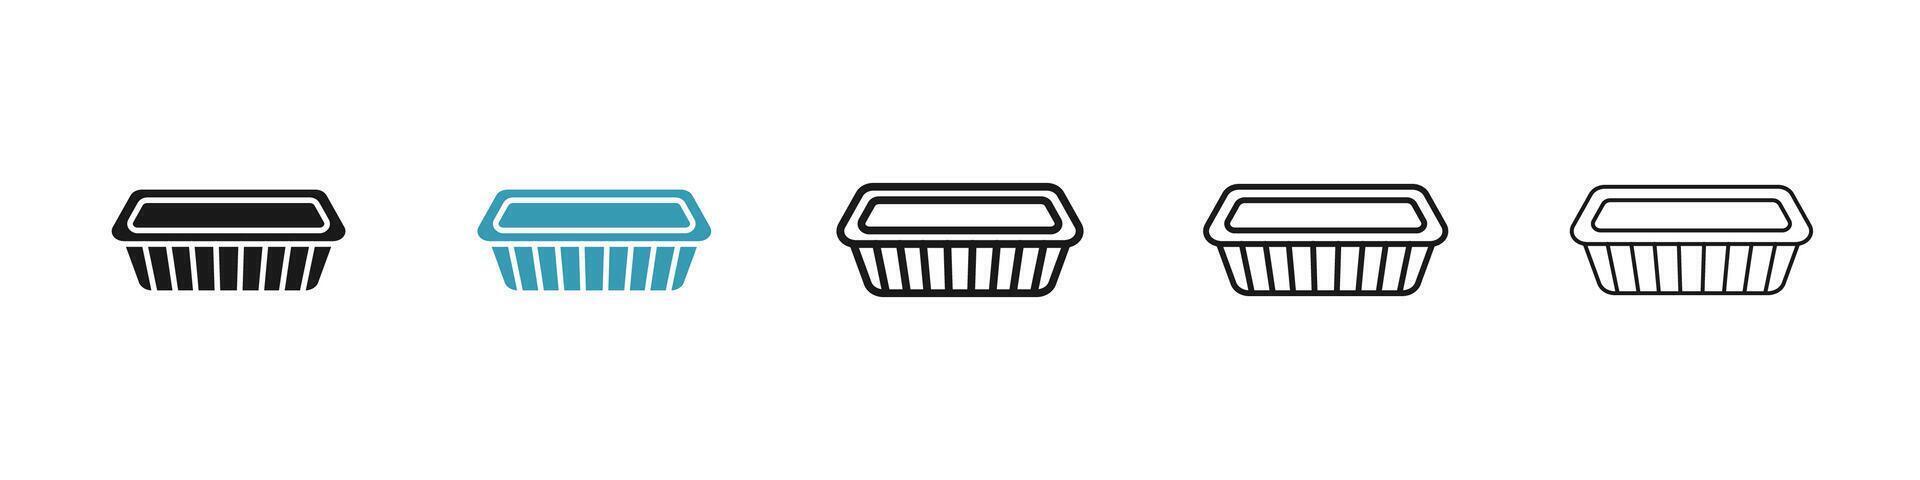 Aluminum foil food container icon vector